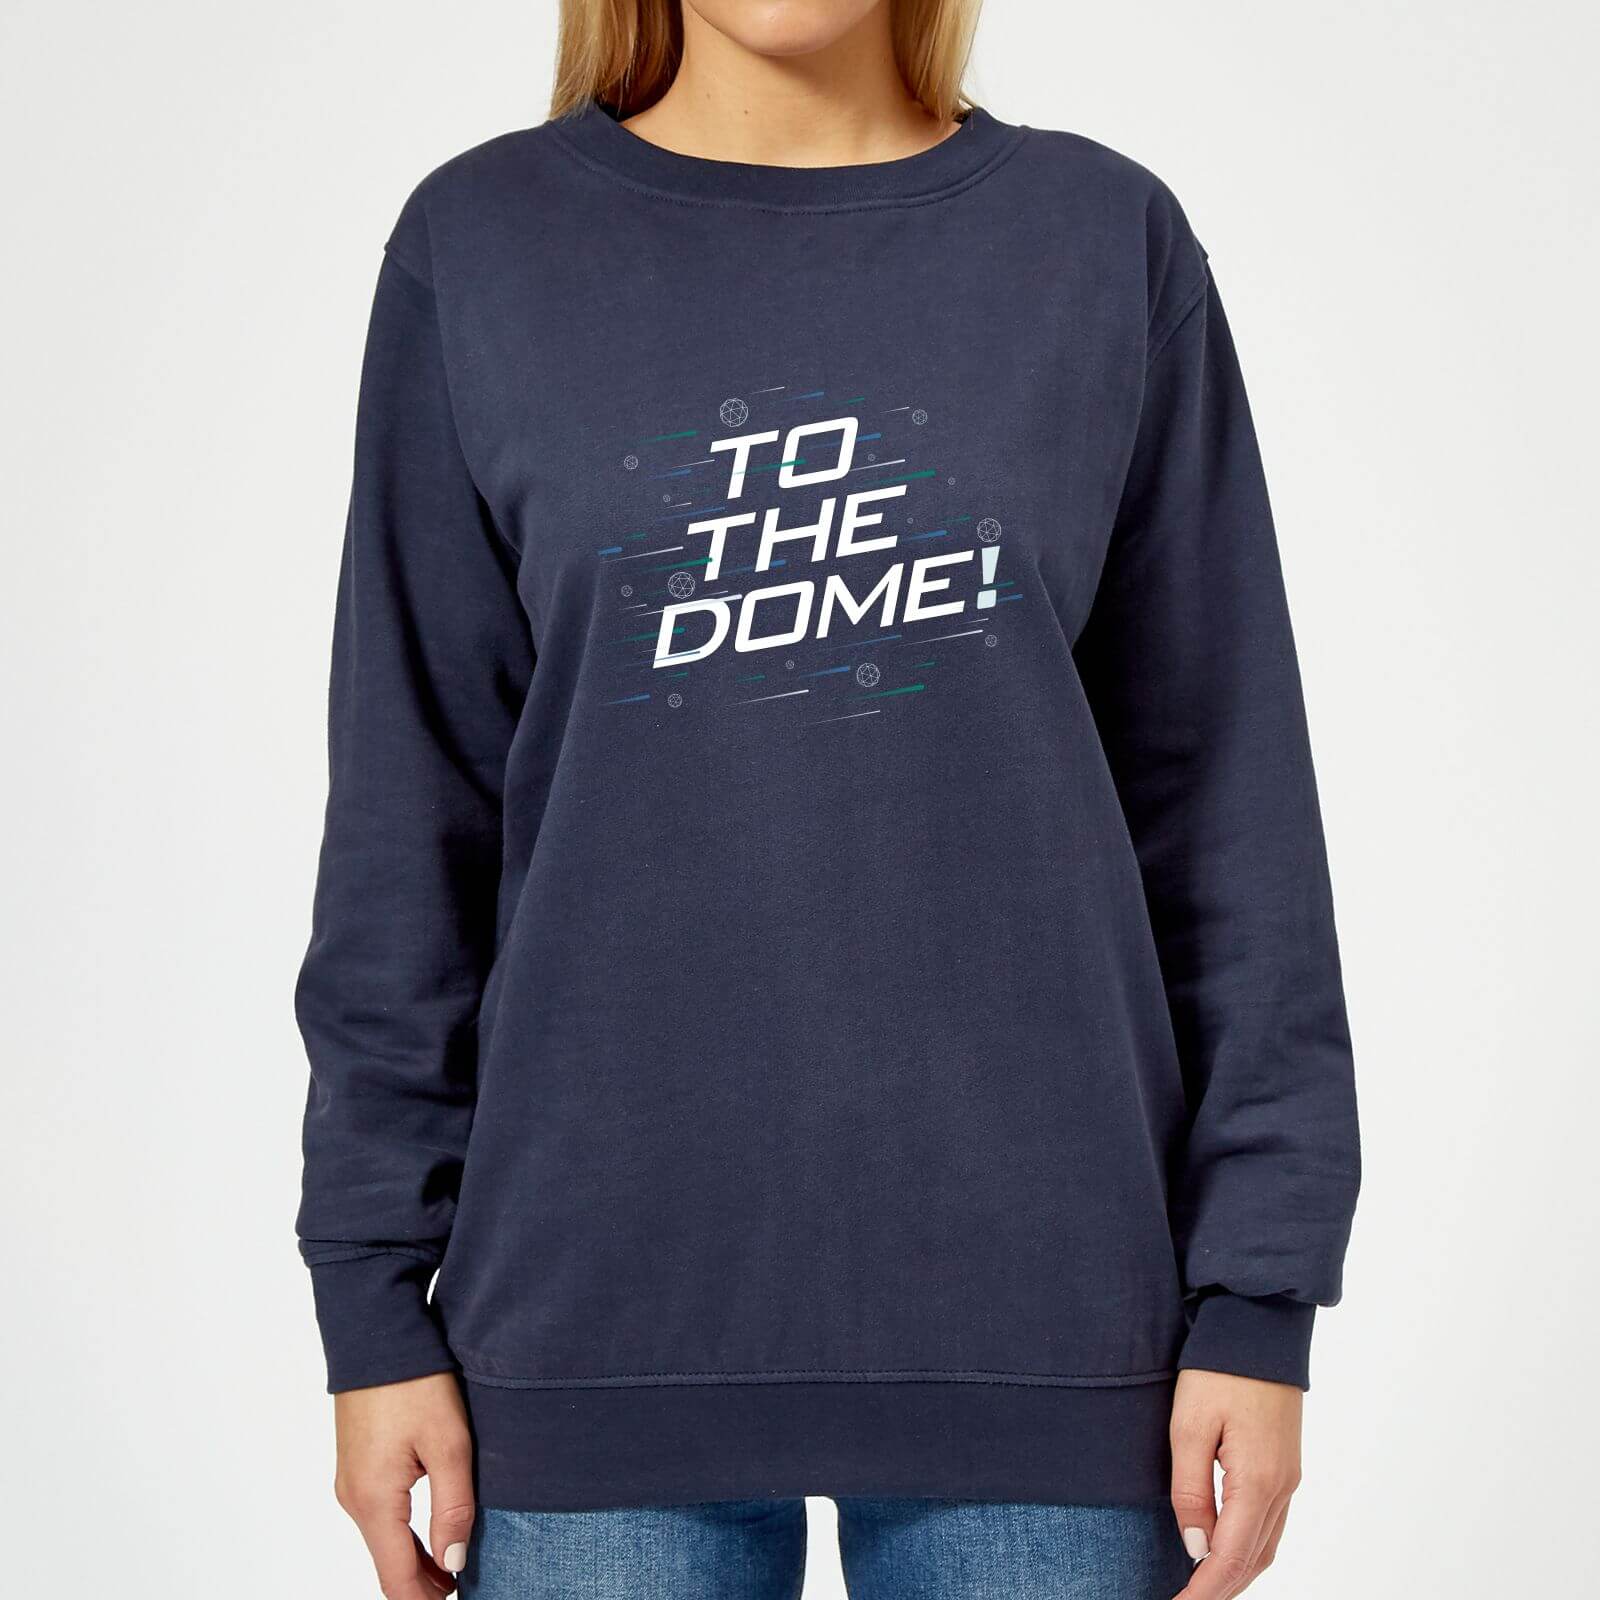 Crystal Maze To The Dome! Women's Sweatshirt - Navy - XS - Navy